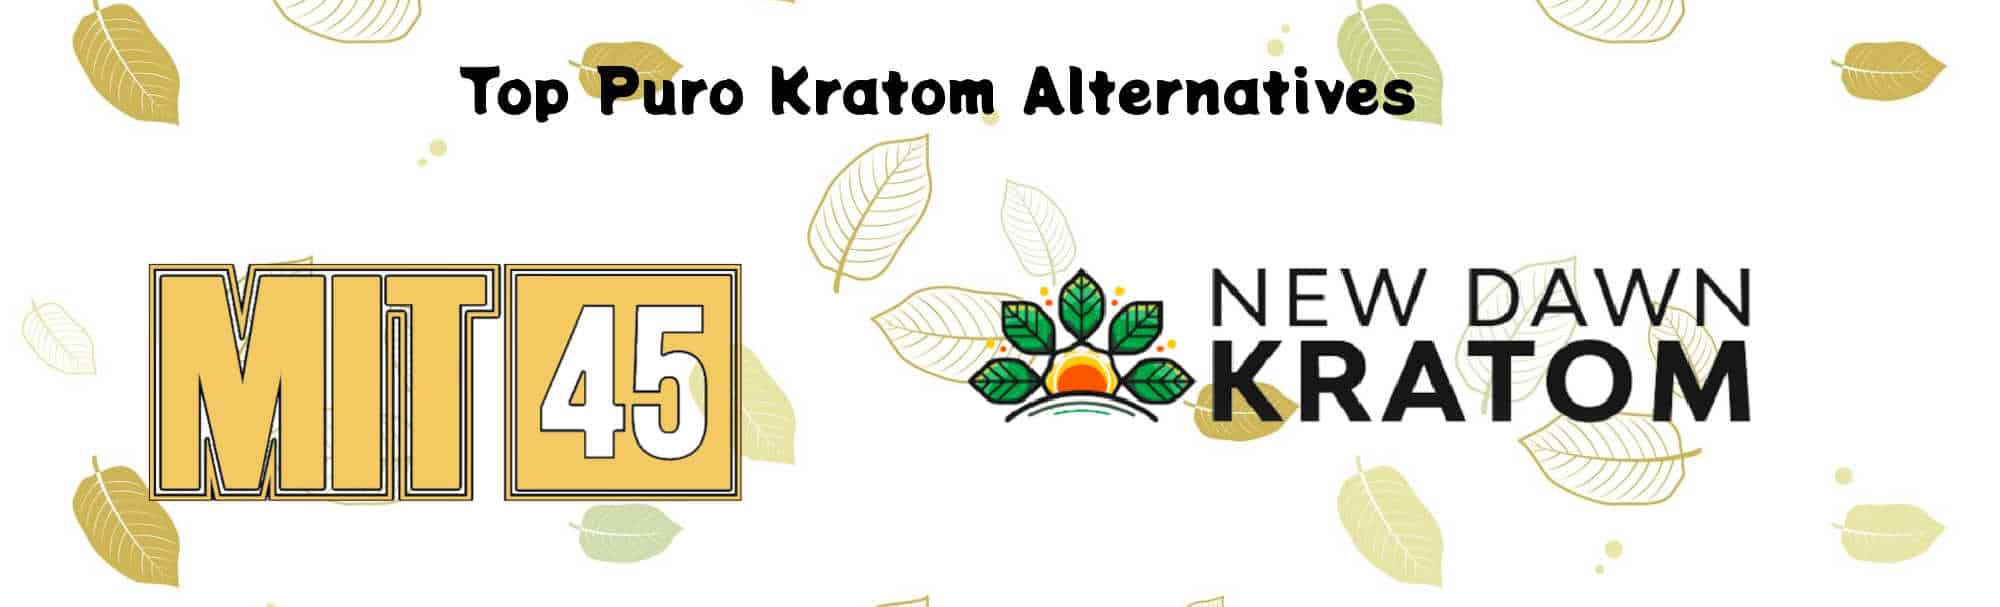 image of puro kratom alternatives